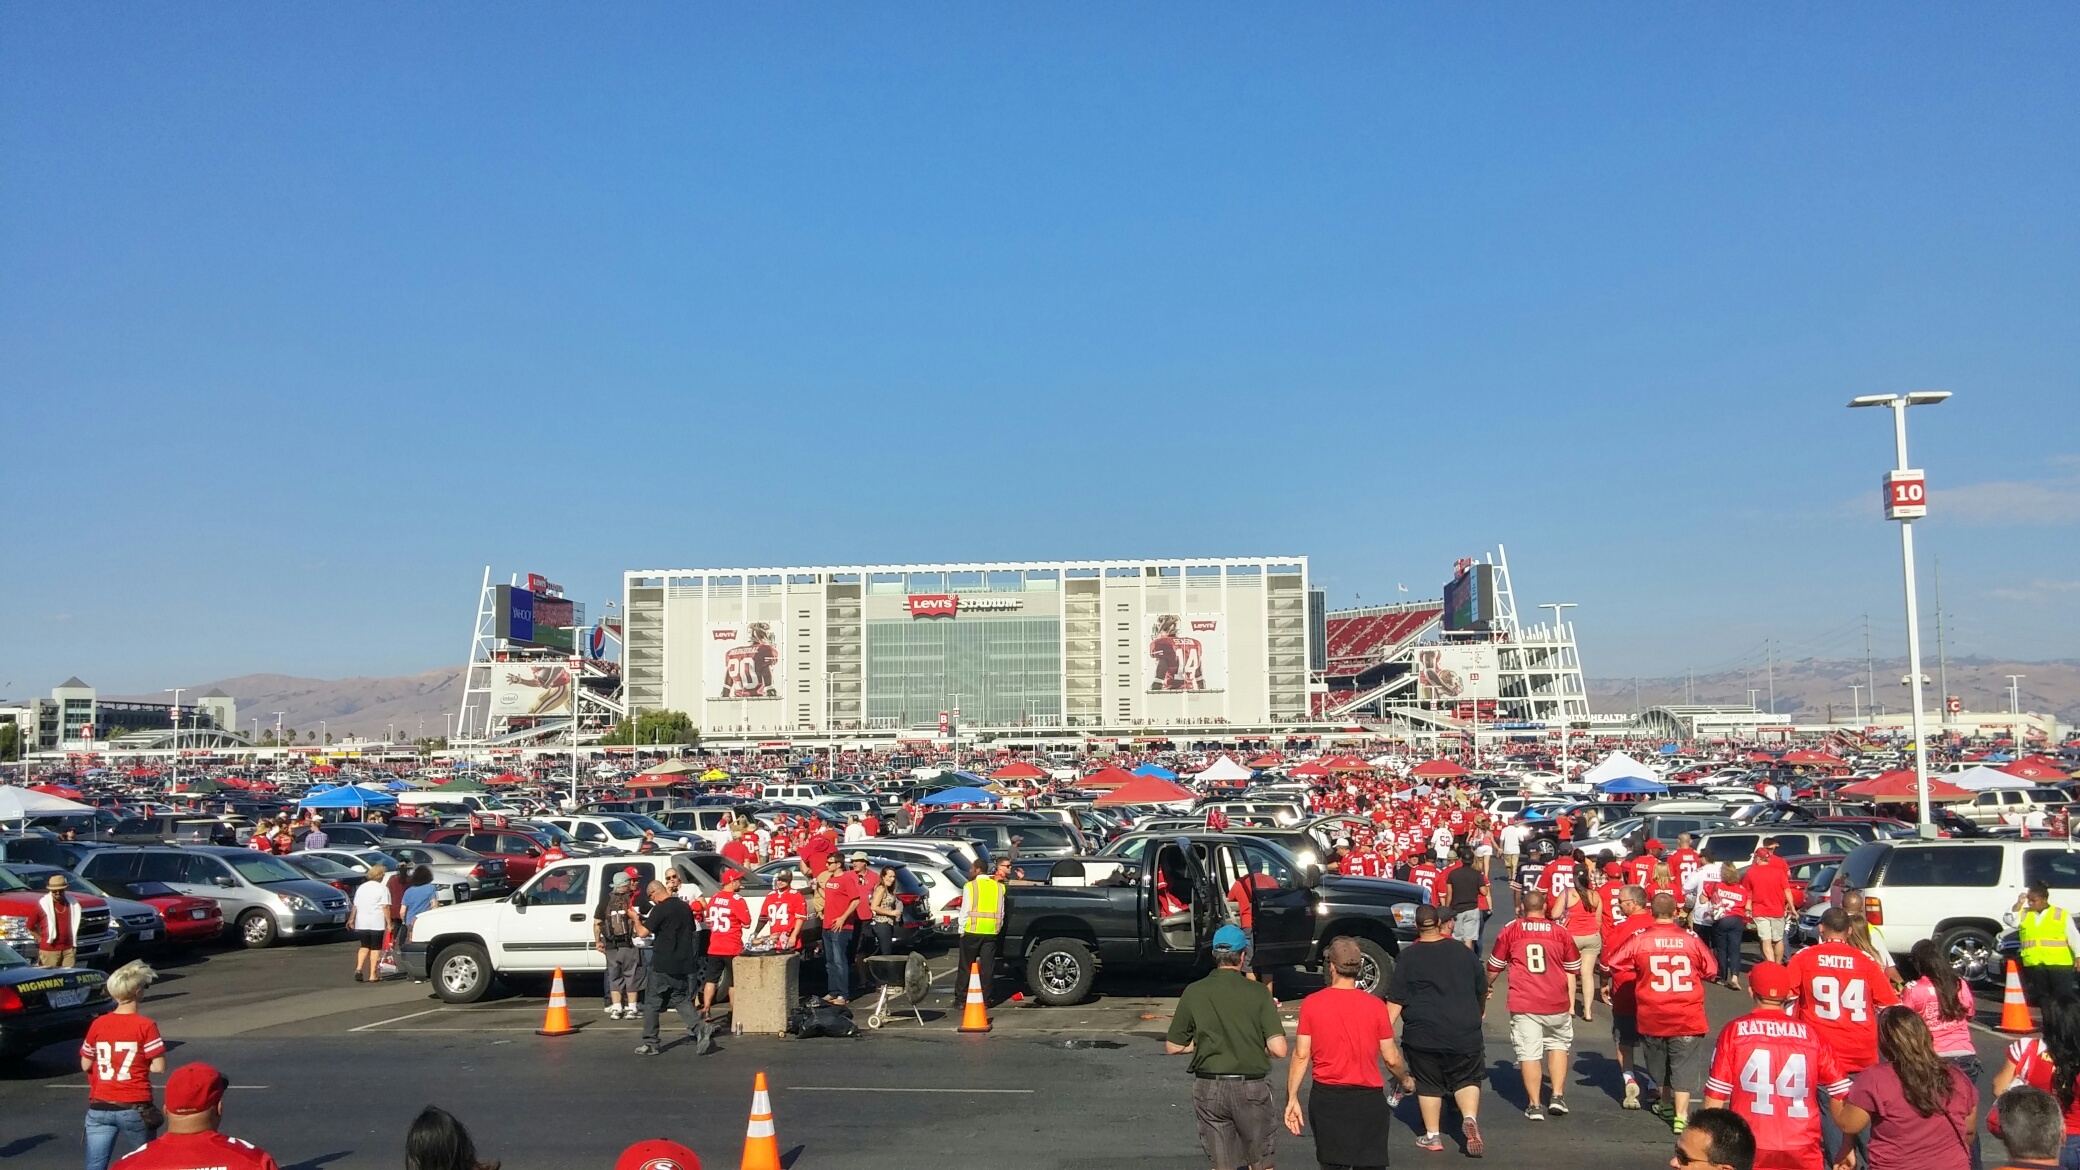 San Francisco 49ers Parking Lots & Passes at Levi's Stadium